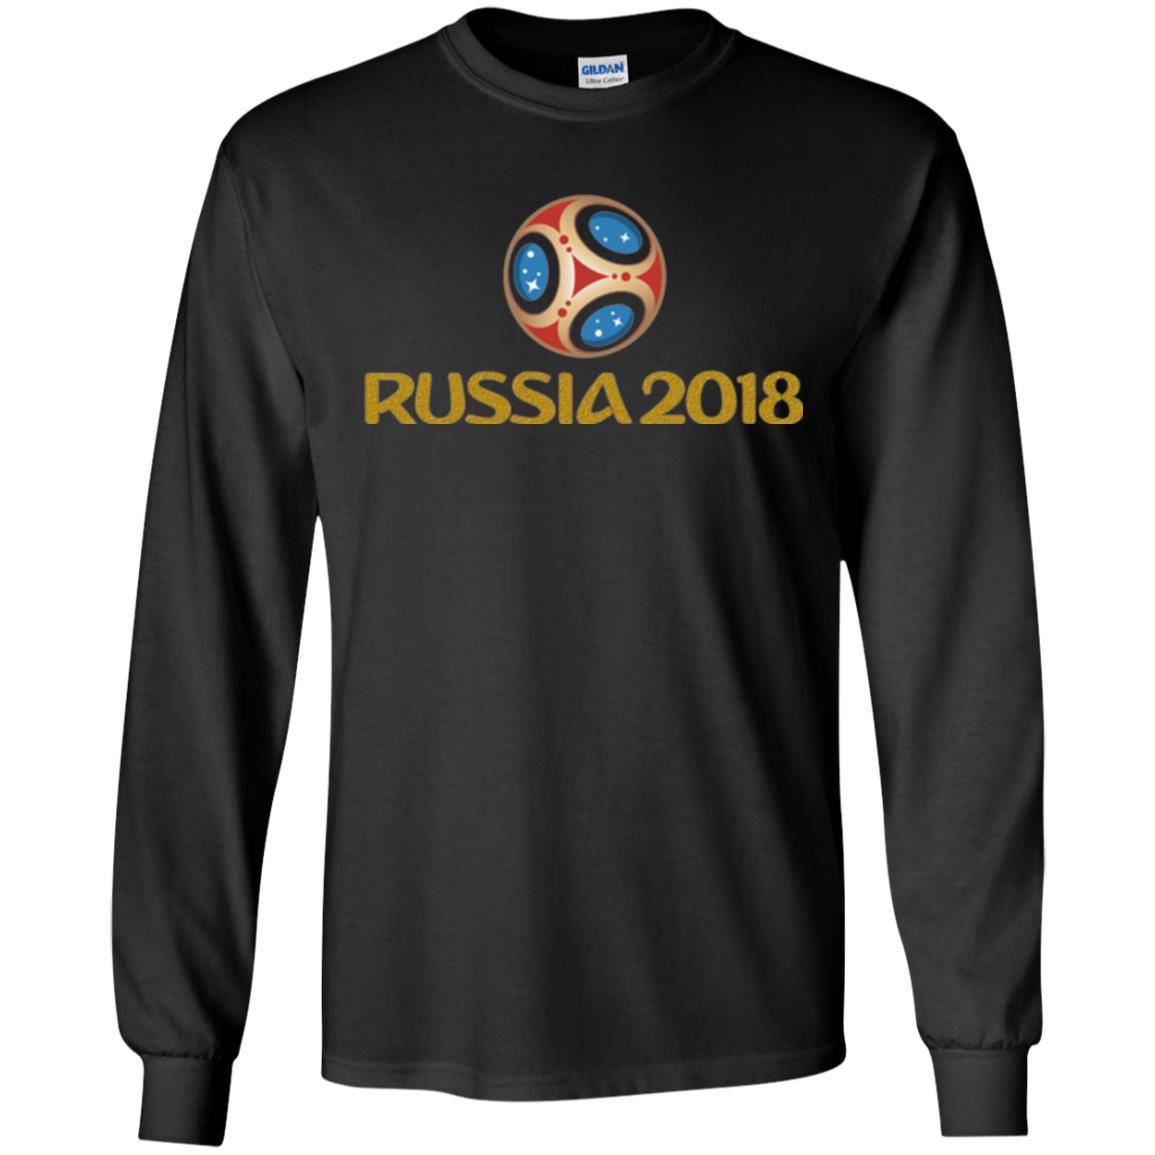 Football T-shirt Russia 2018 World Cup